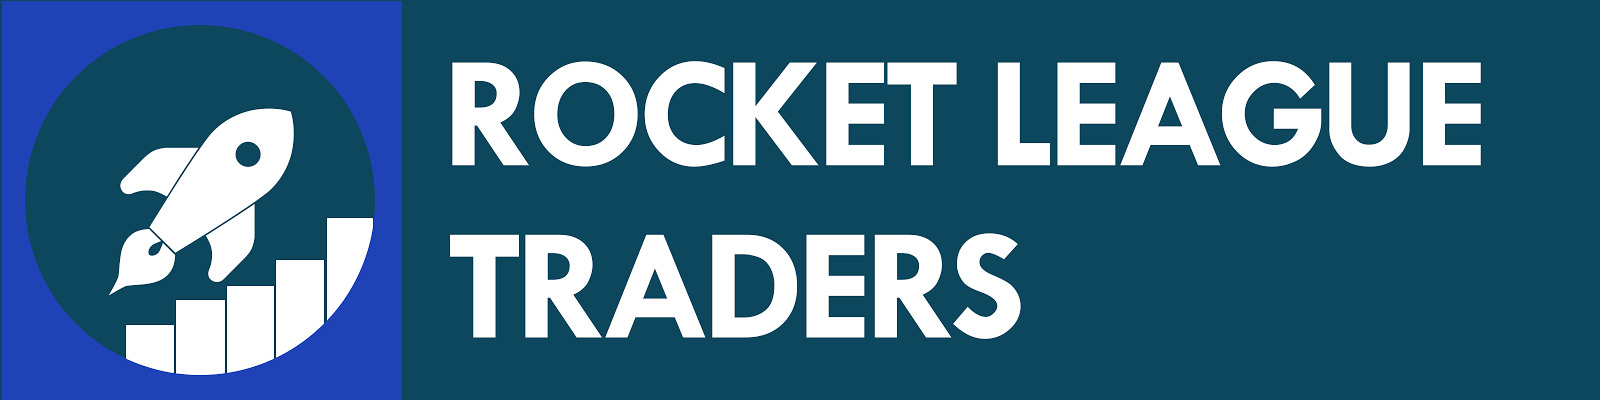 Rocket League Traders